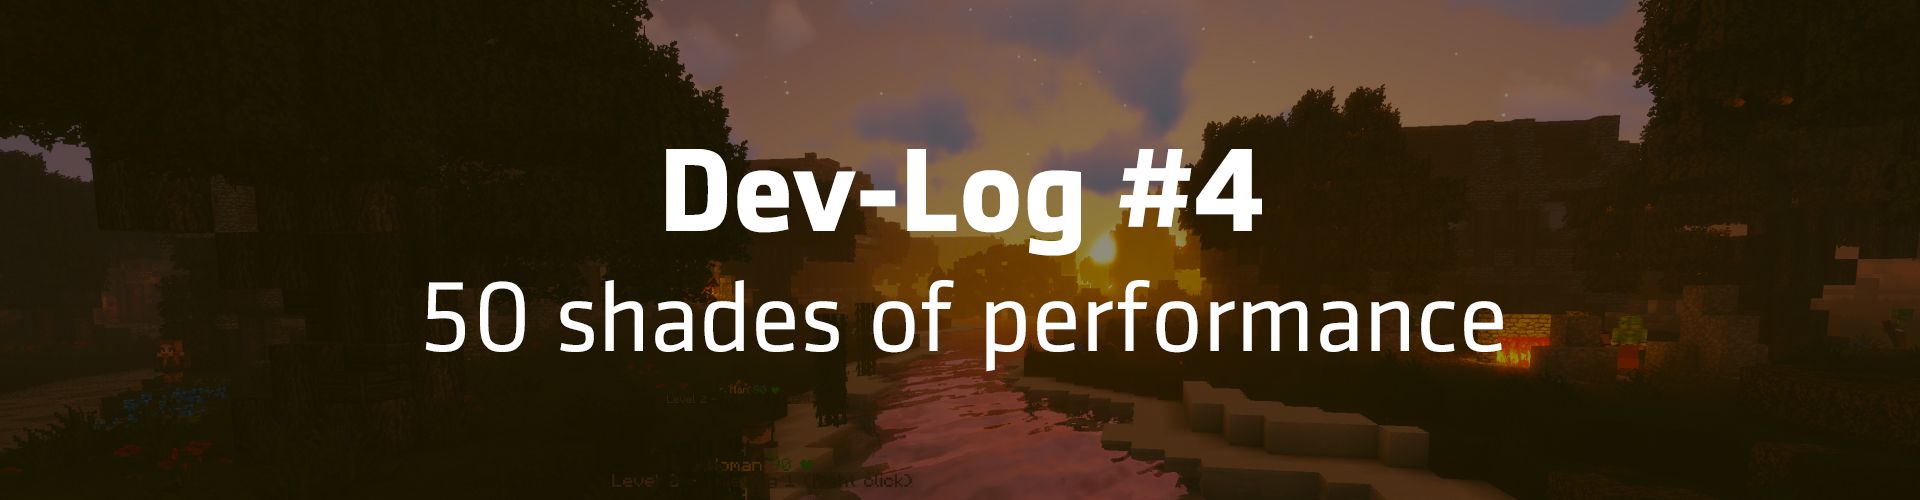 Dev-Log #4 - 50 shades of performance